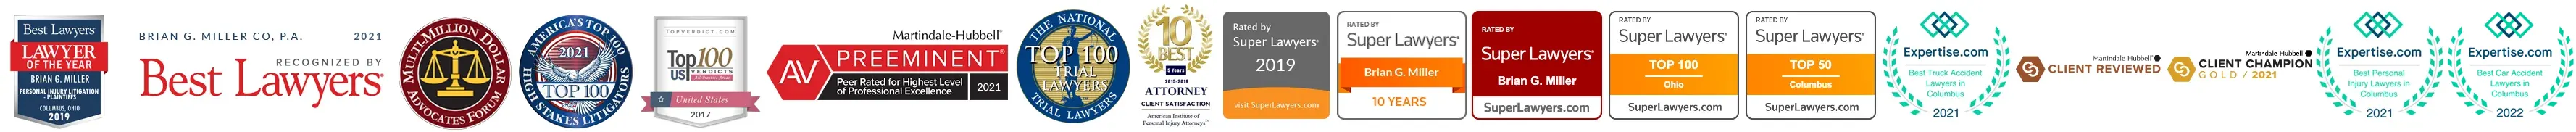 Super Lawyers Top 100 - Ohio